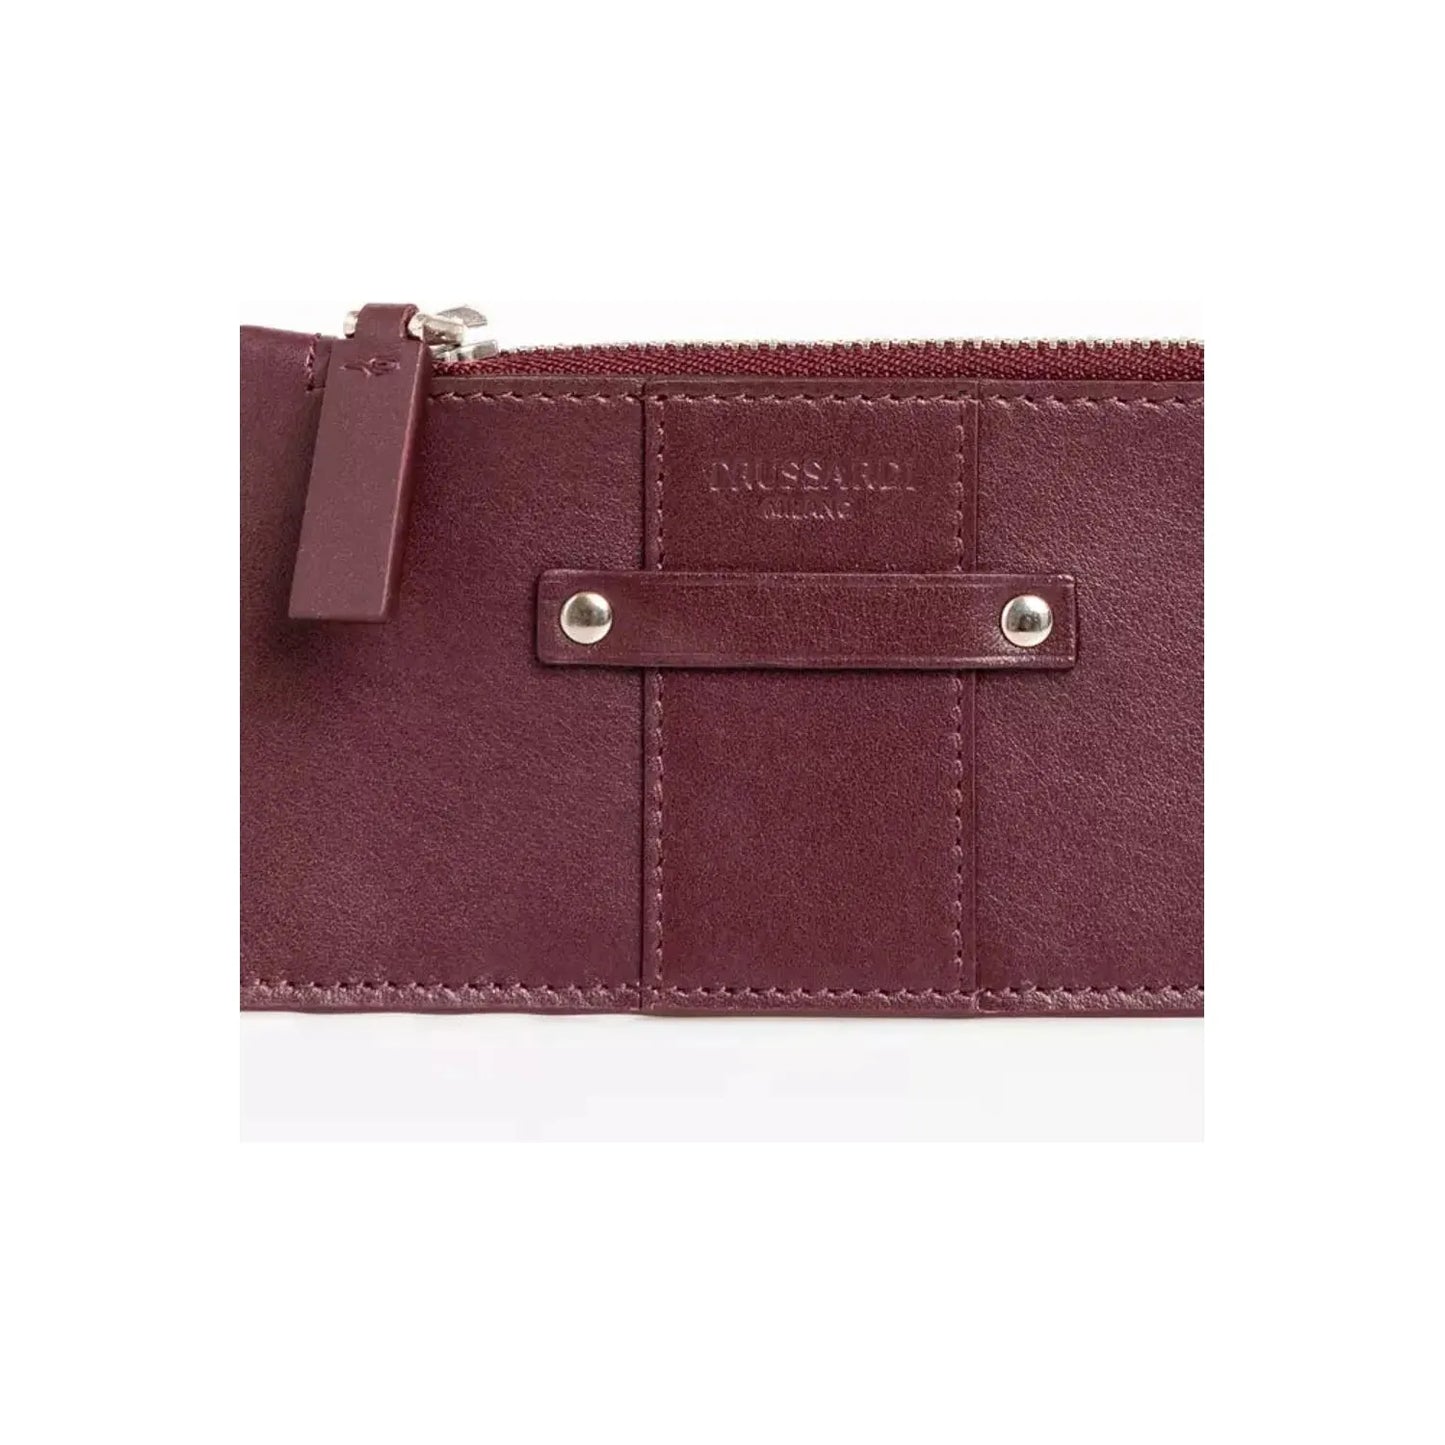 Trussardi Elegant Soft Leather Card Holder in Rich Brown r-wallet-6 Wallet